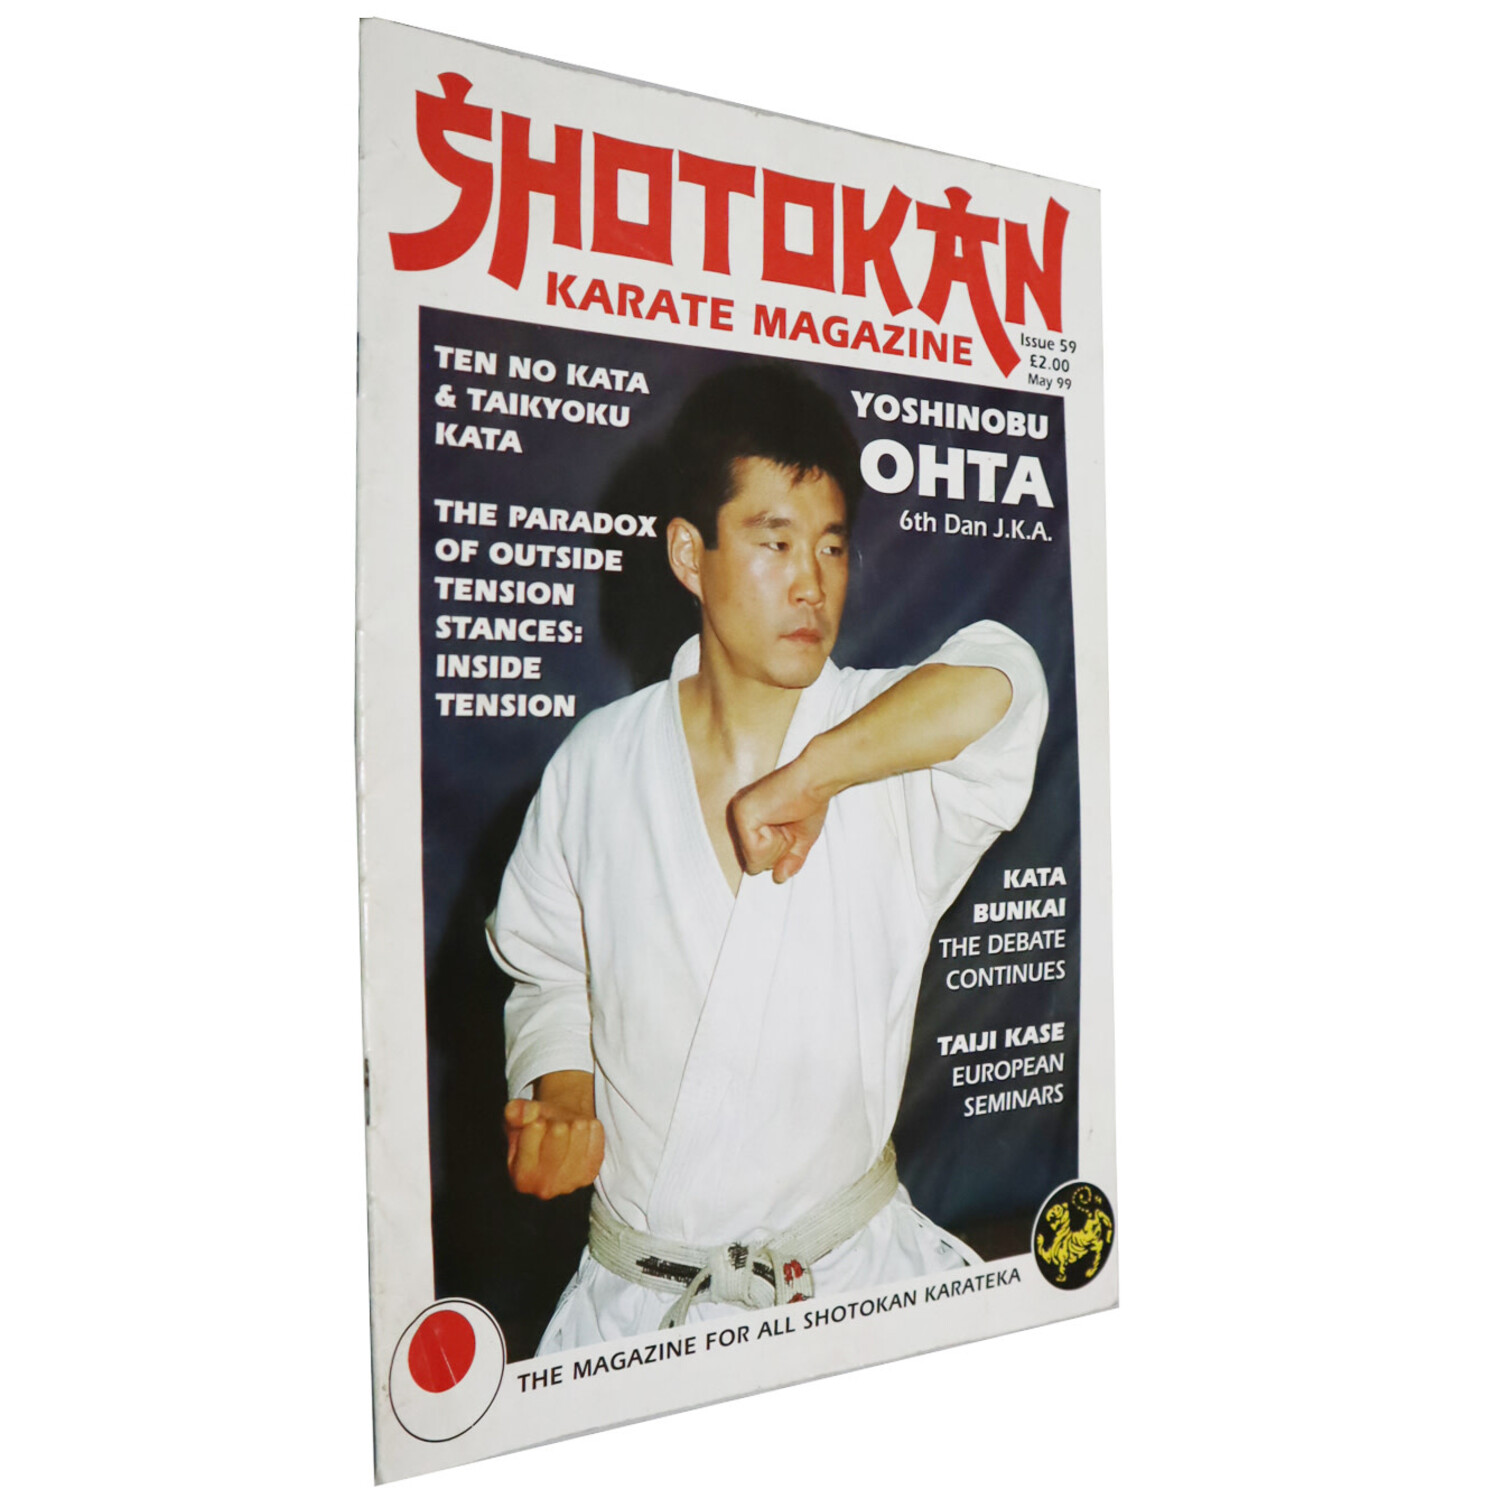 Shotokan Karate Magazine Issue 59 Enso Martial Arts Shop Bristol 